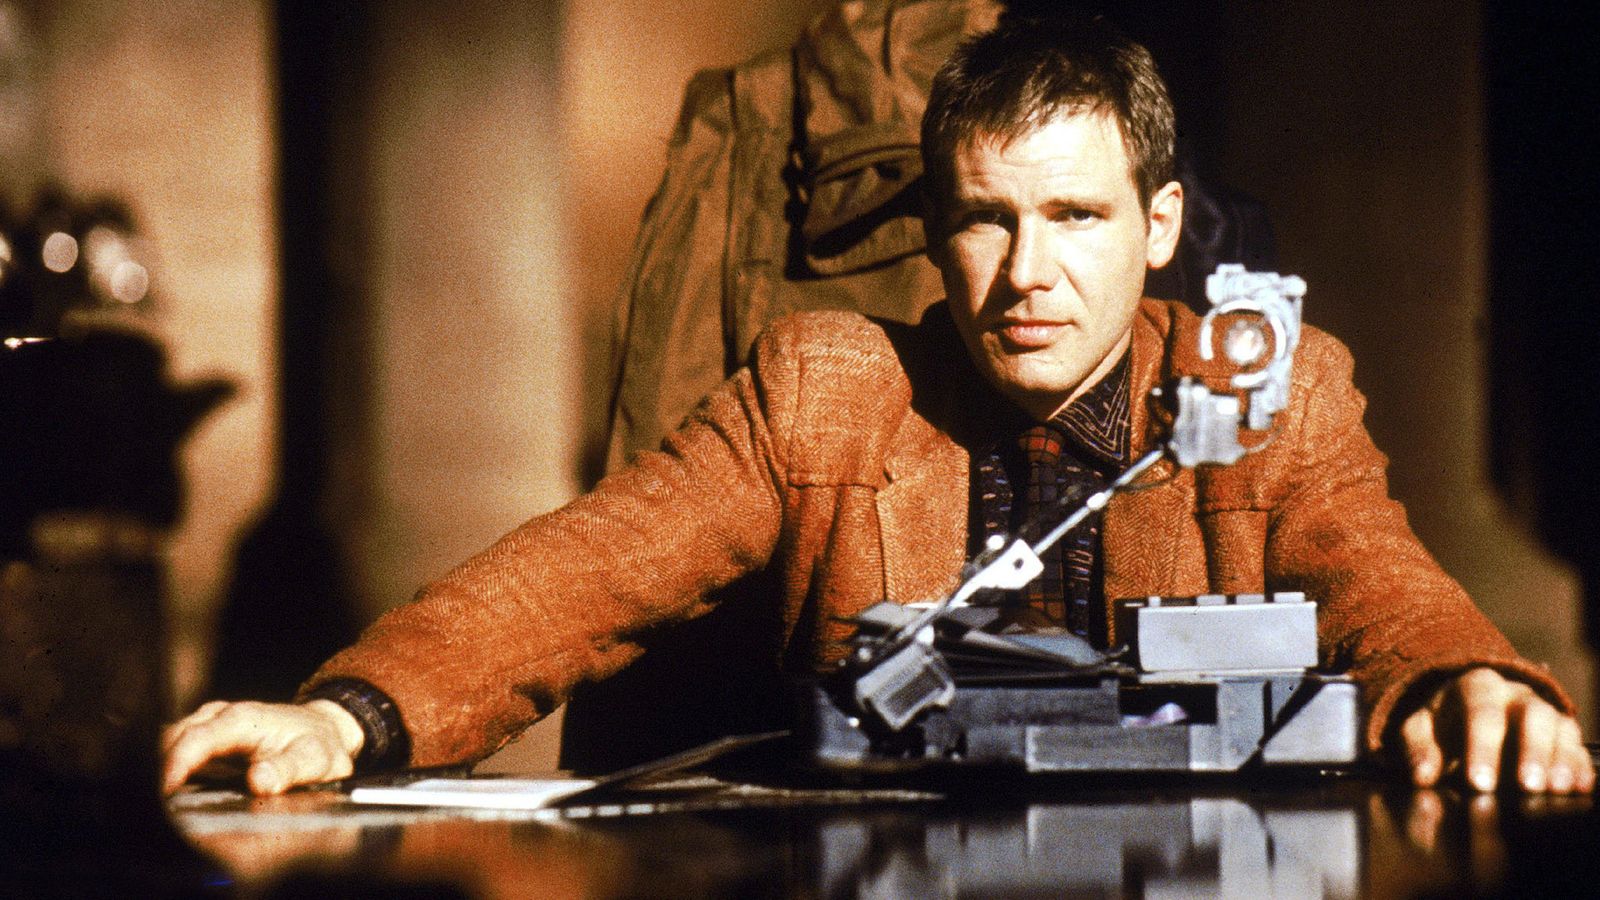 Foto: Fotograma de 'Blade Runner' donde Harrison Ford somete a un replicante al test de Voigt-Kampf